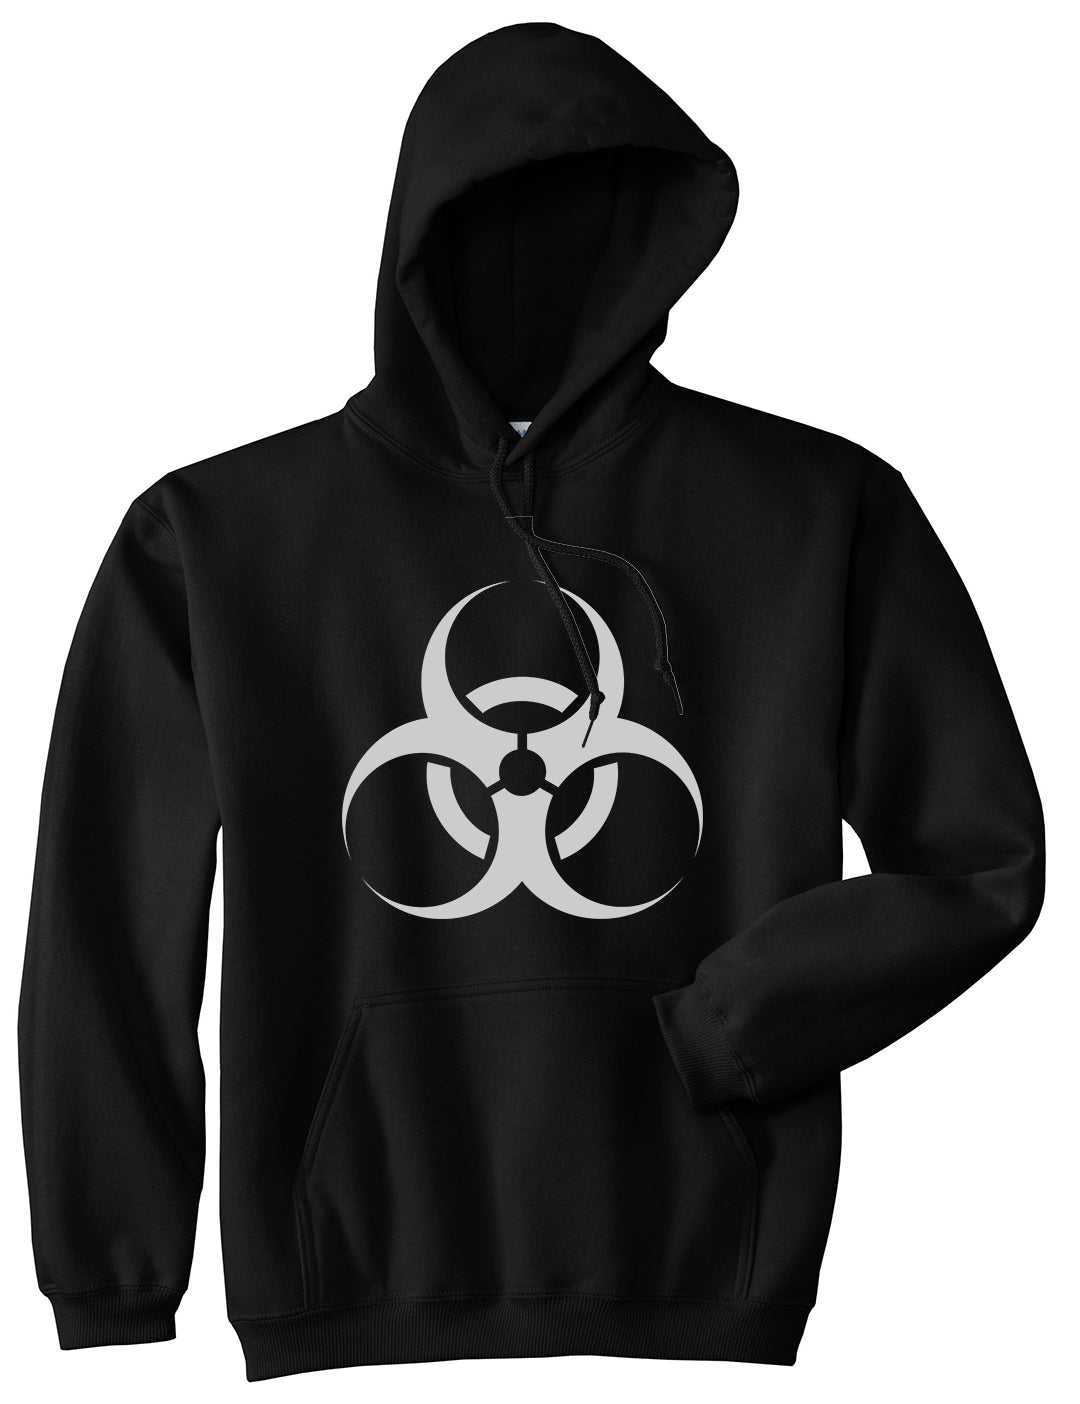 Biohazard Symbol Black Pullover Hoodie by Kings Of NY